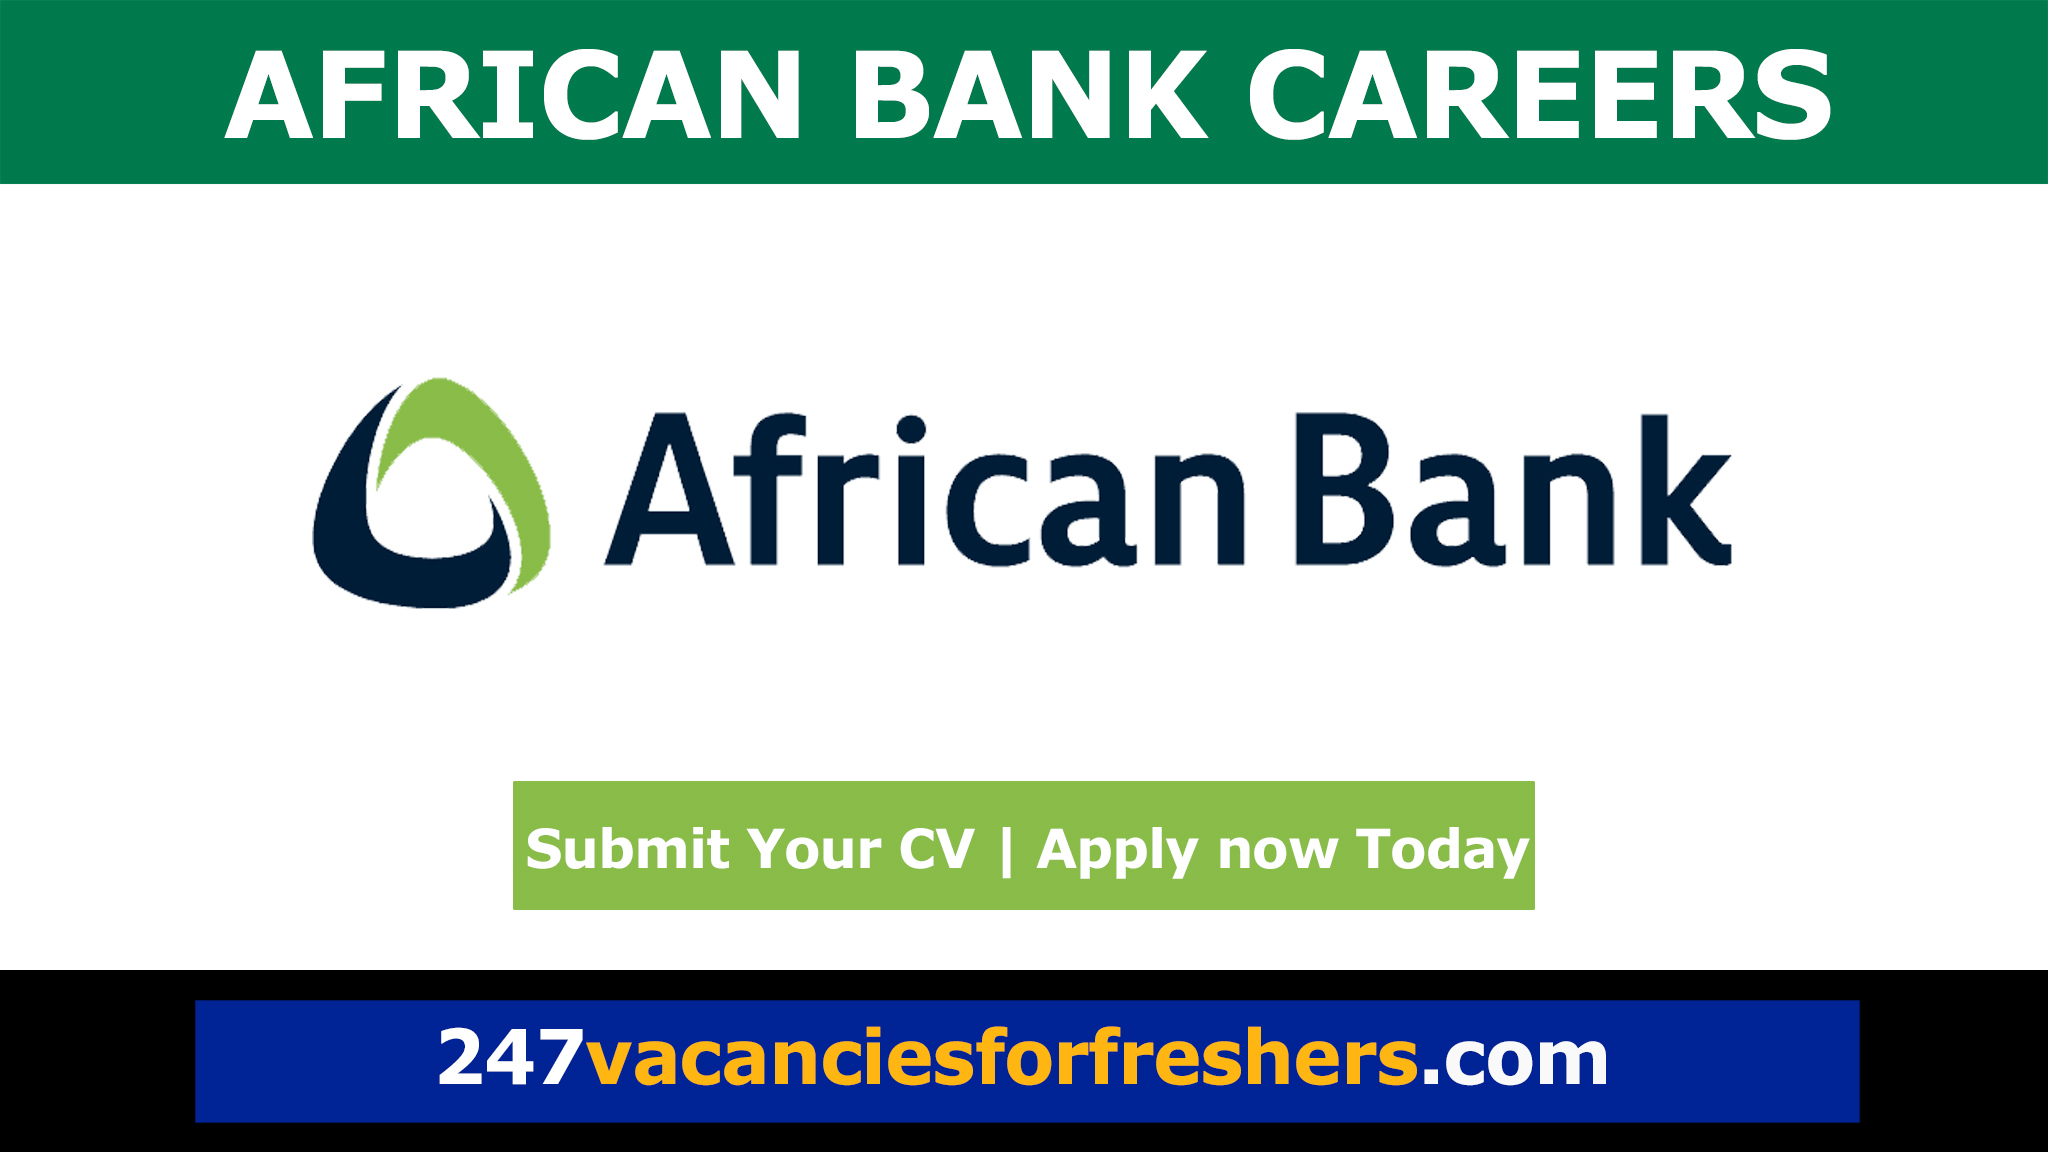 African Bank Careers